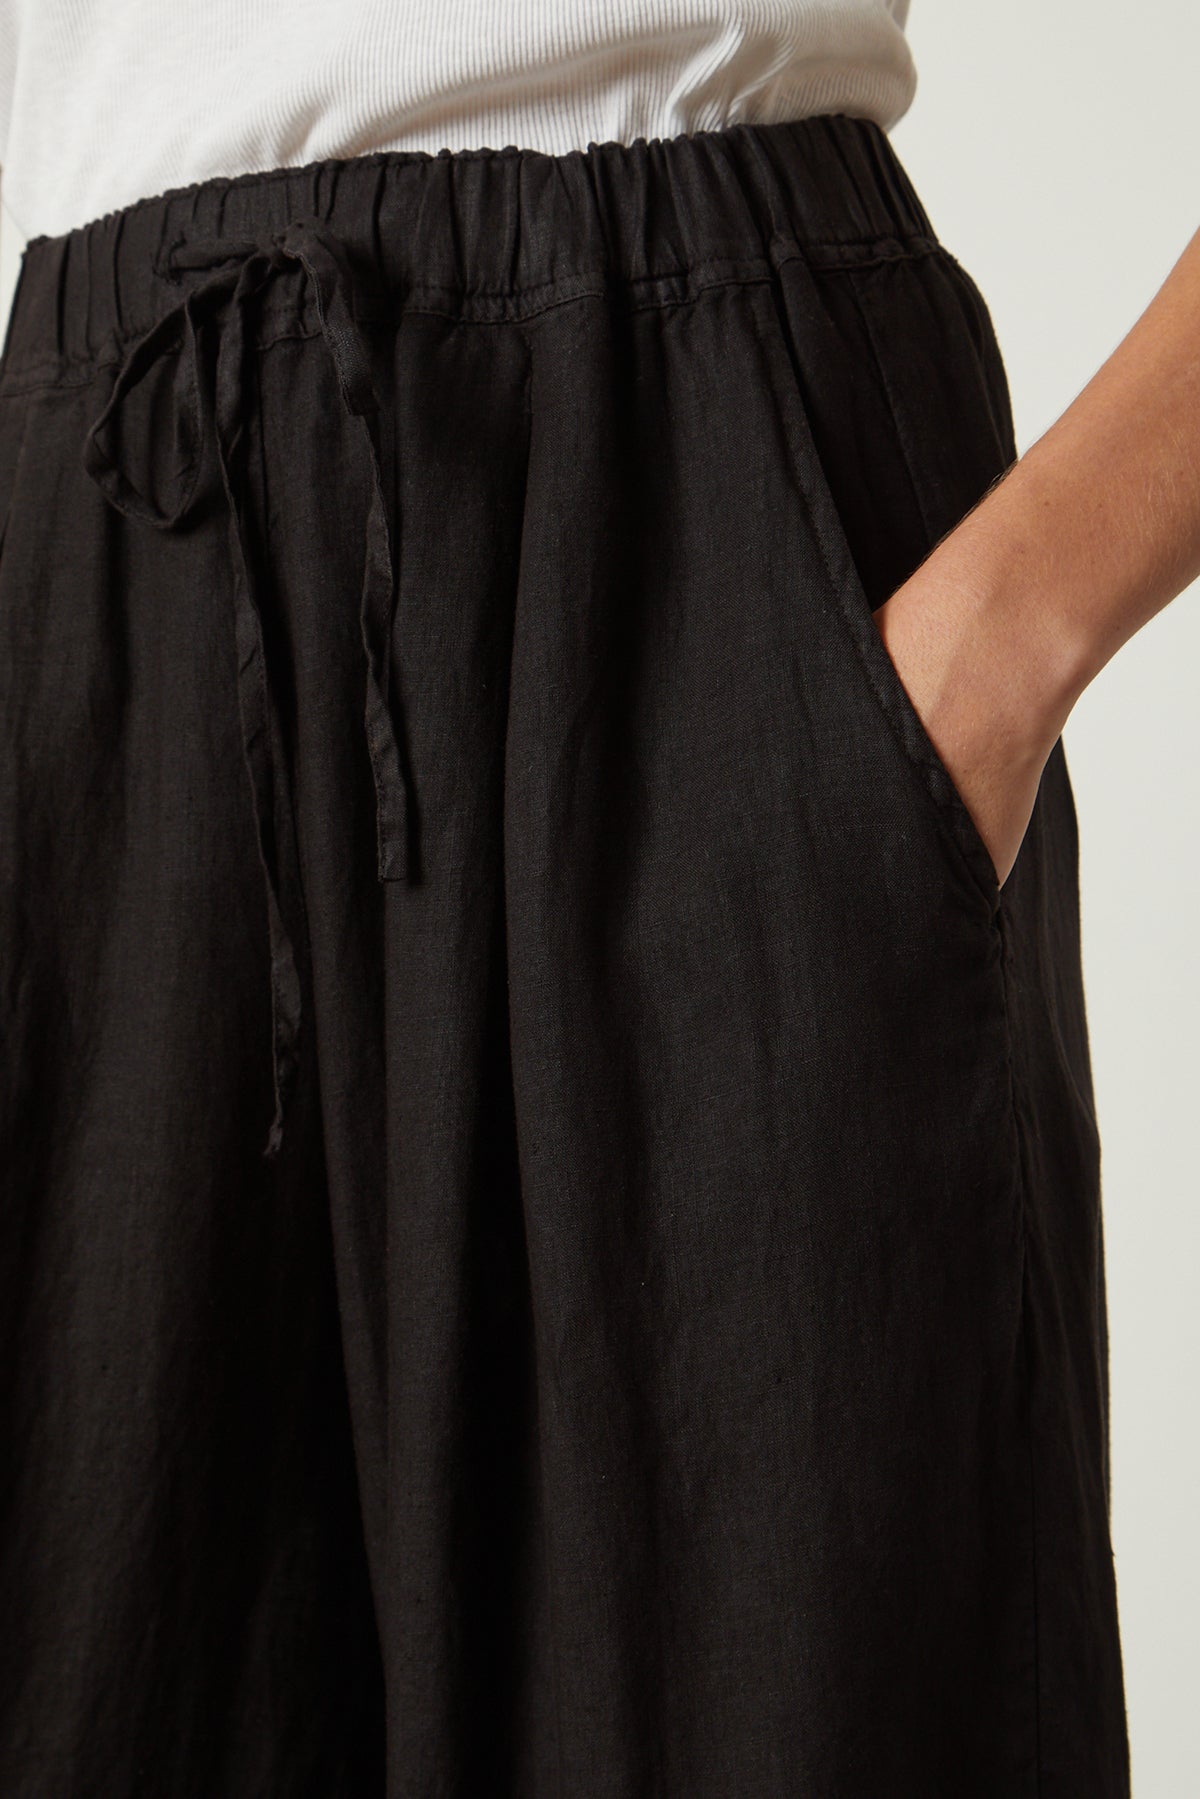   Hannah Linen Pant in black front & pocket detail 